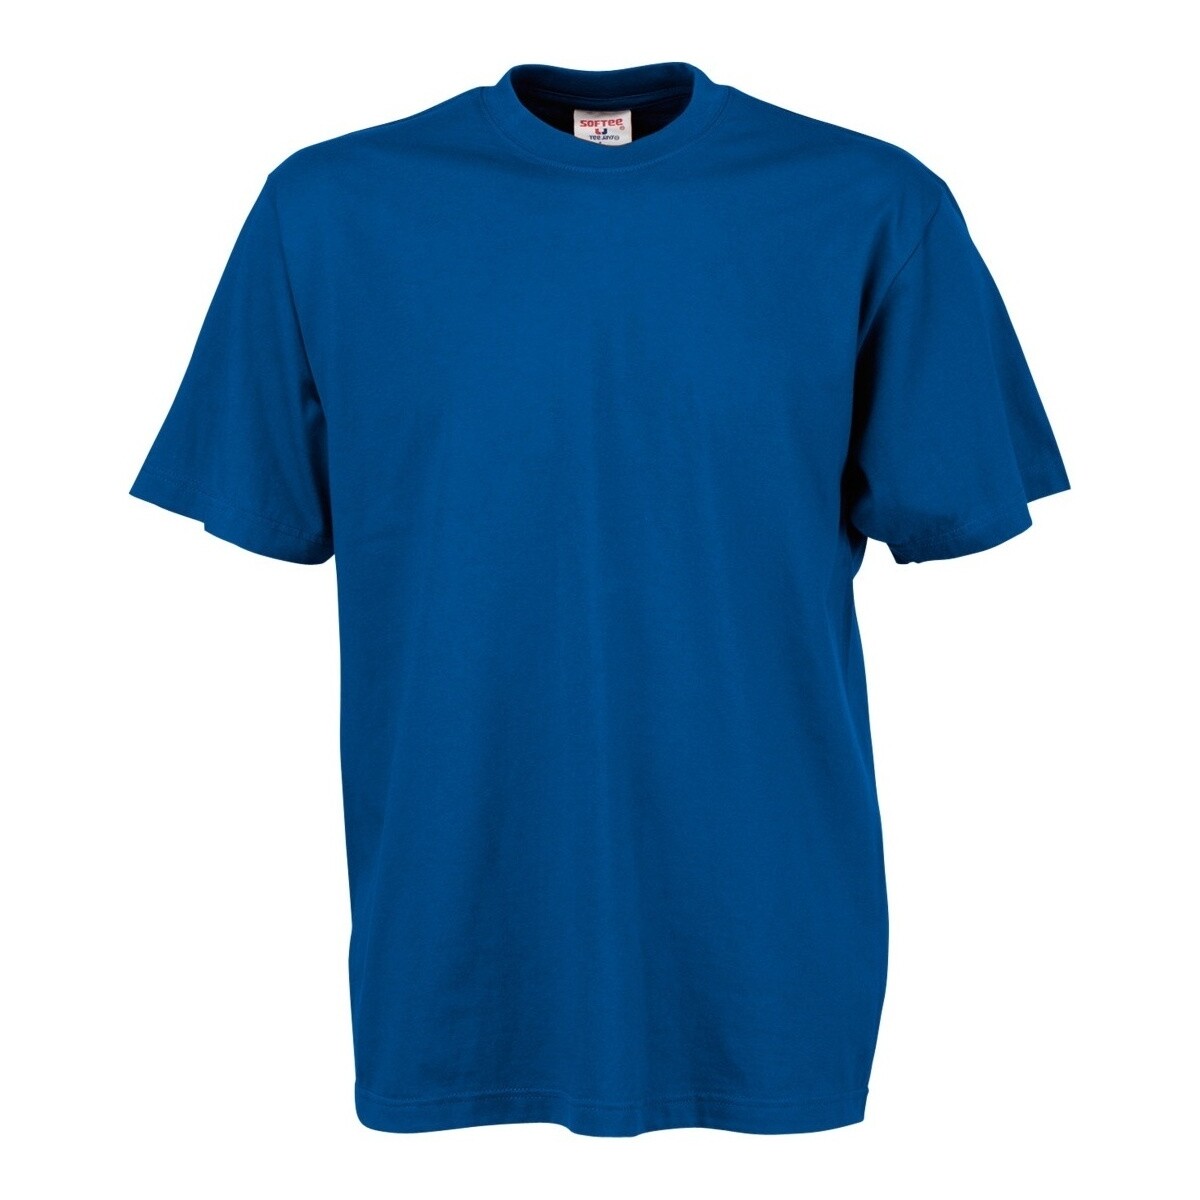 Abbigliamento Uomo T-shirt maniche corte Tee Jays TJ8000 Blu